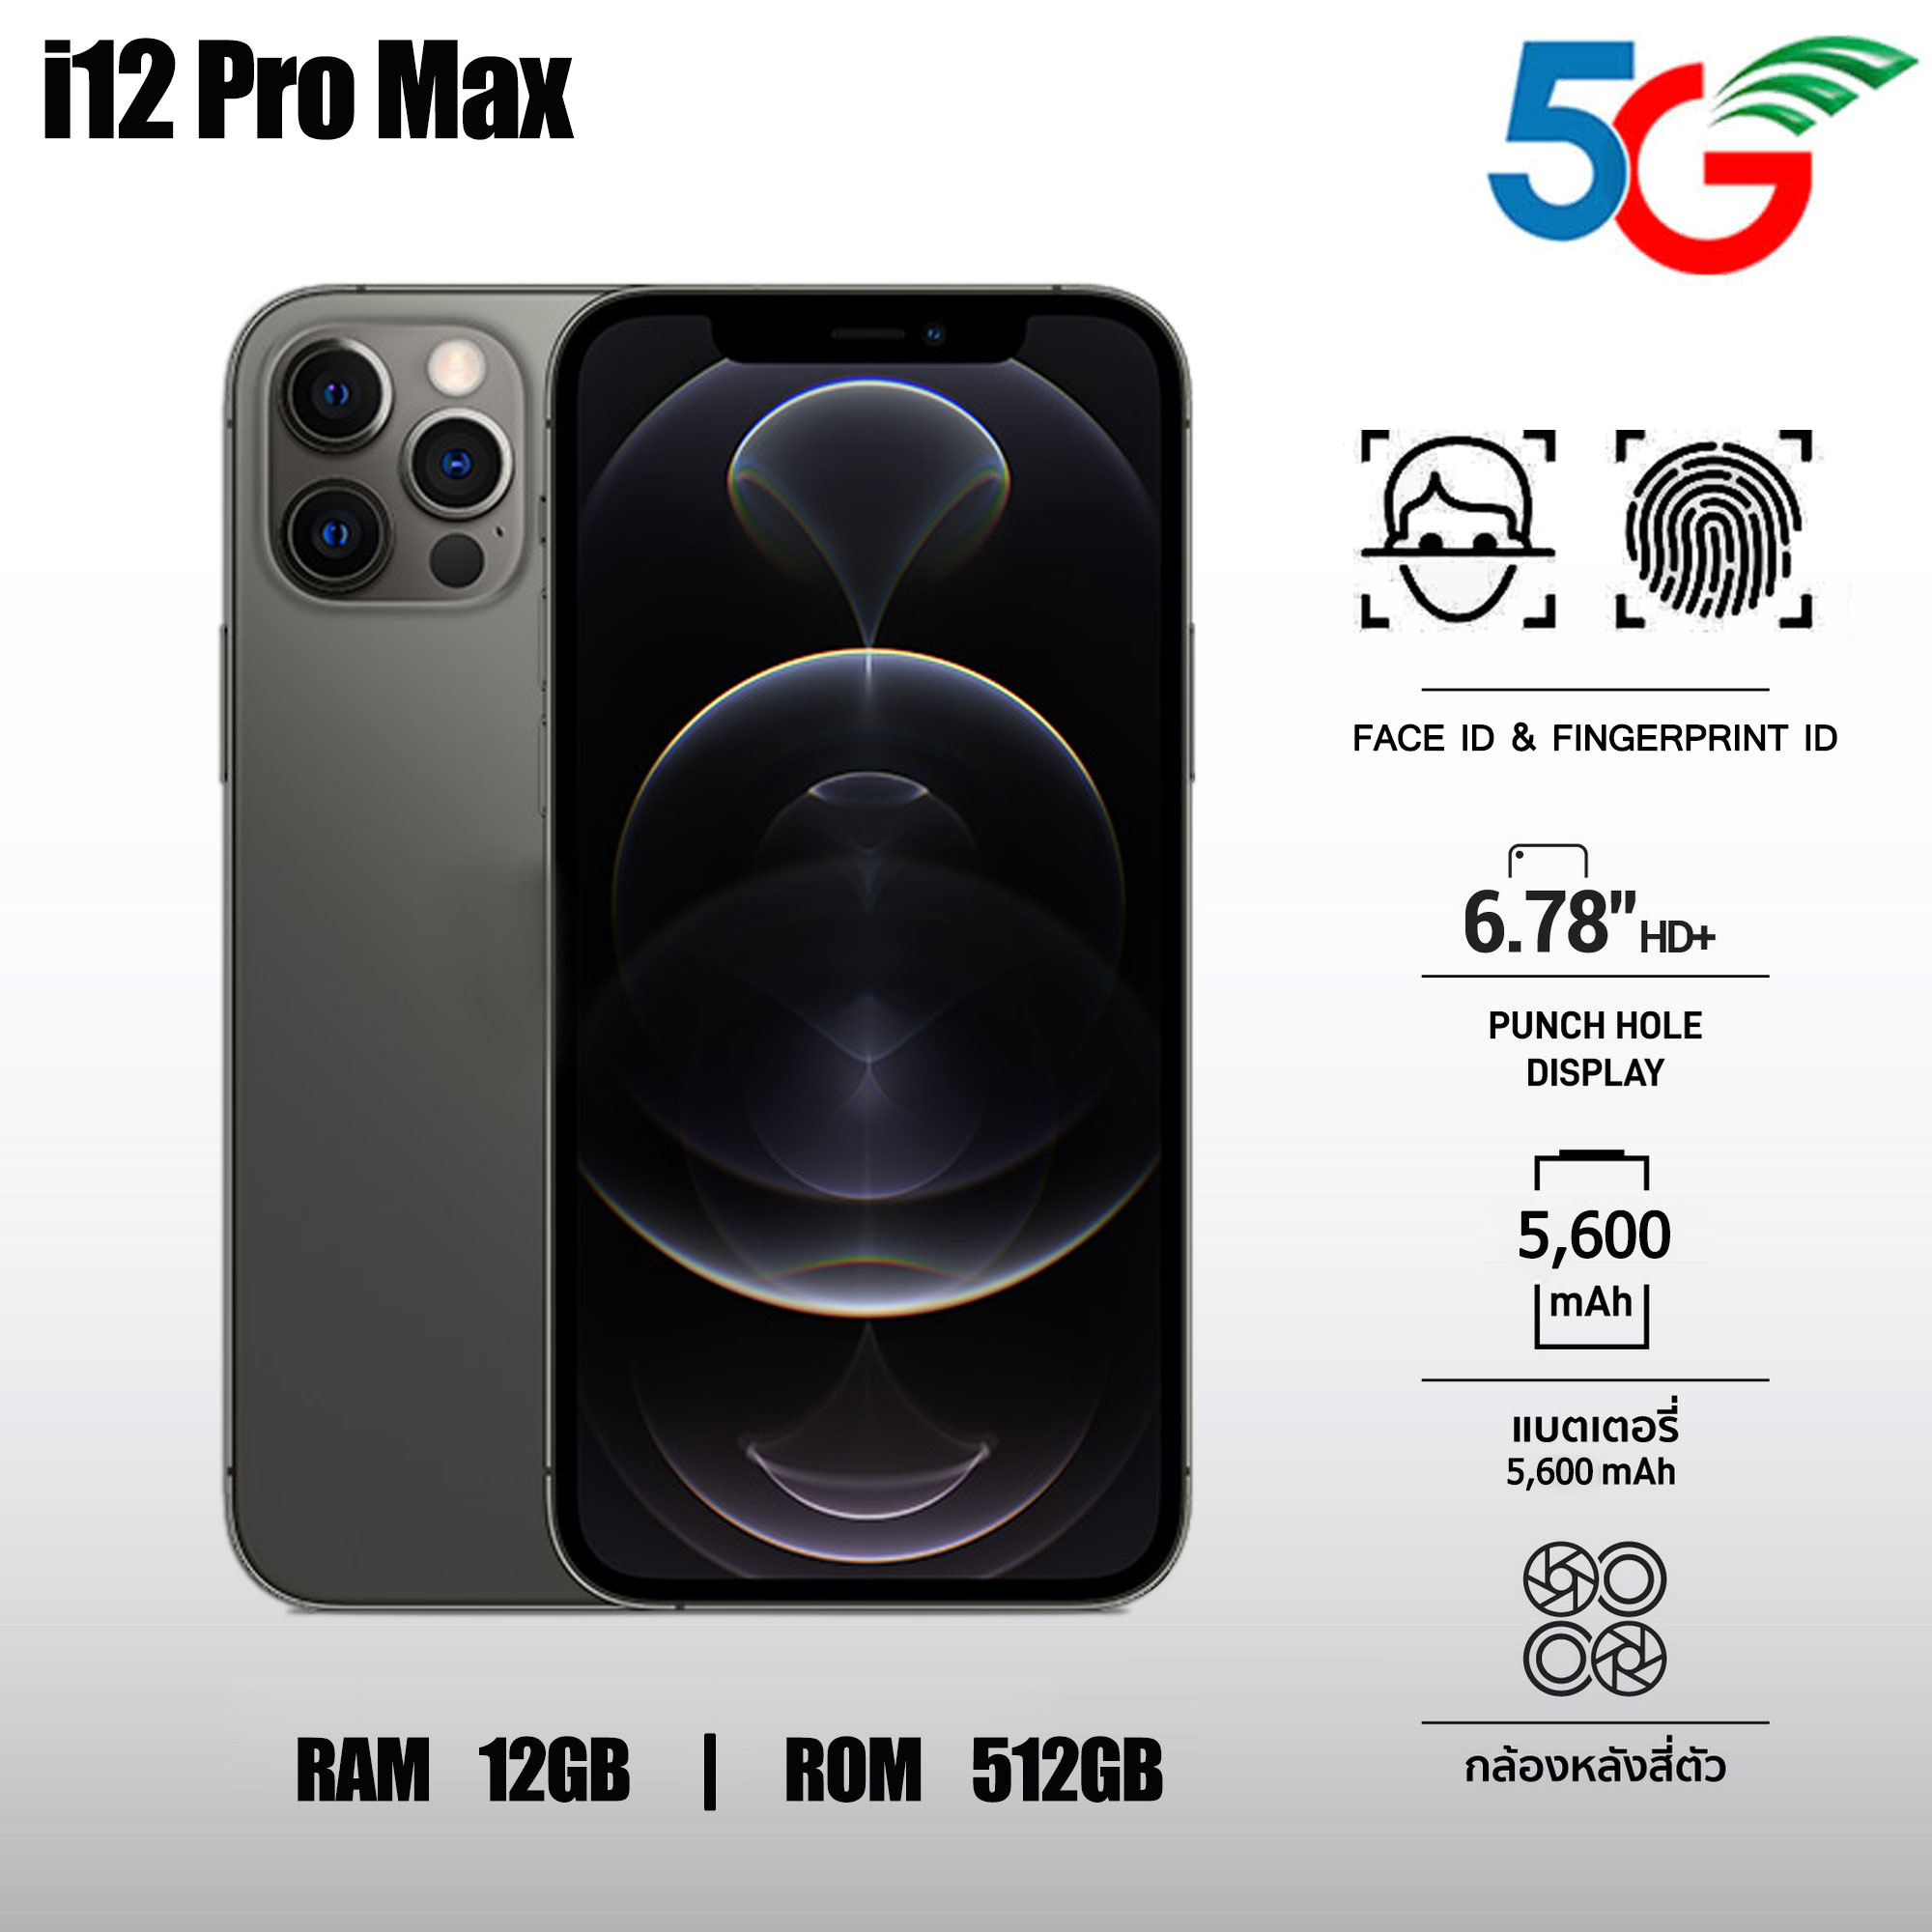 2021 i12 Pro Max โทรศัพท์มือถือ (Ram 12GB + Rom 512GB)สัญญาณเน็ต5G หน้าจอ 7.2"HD แบตฯอึด 3,999mAh กล้องหลัง4ตัว 48MP  สมาร์ทโฟน มือถือราคาถูก โทรศัพท์มือถือห โทรศัพท์ถูกๆ โทรศัพท์มือถือราคาถูก โทรศัพท์มือถือถูกๆ มือถือ โทรศัพท์ โทรสับ Mobile phone